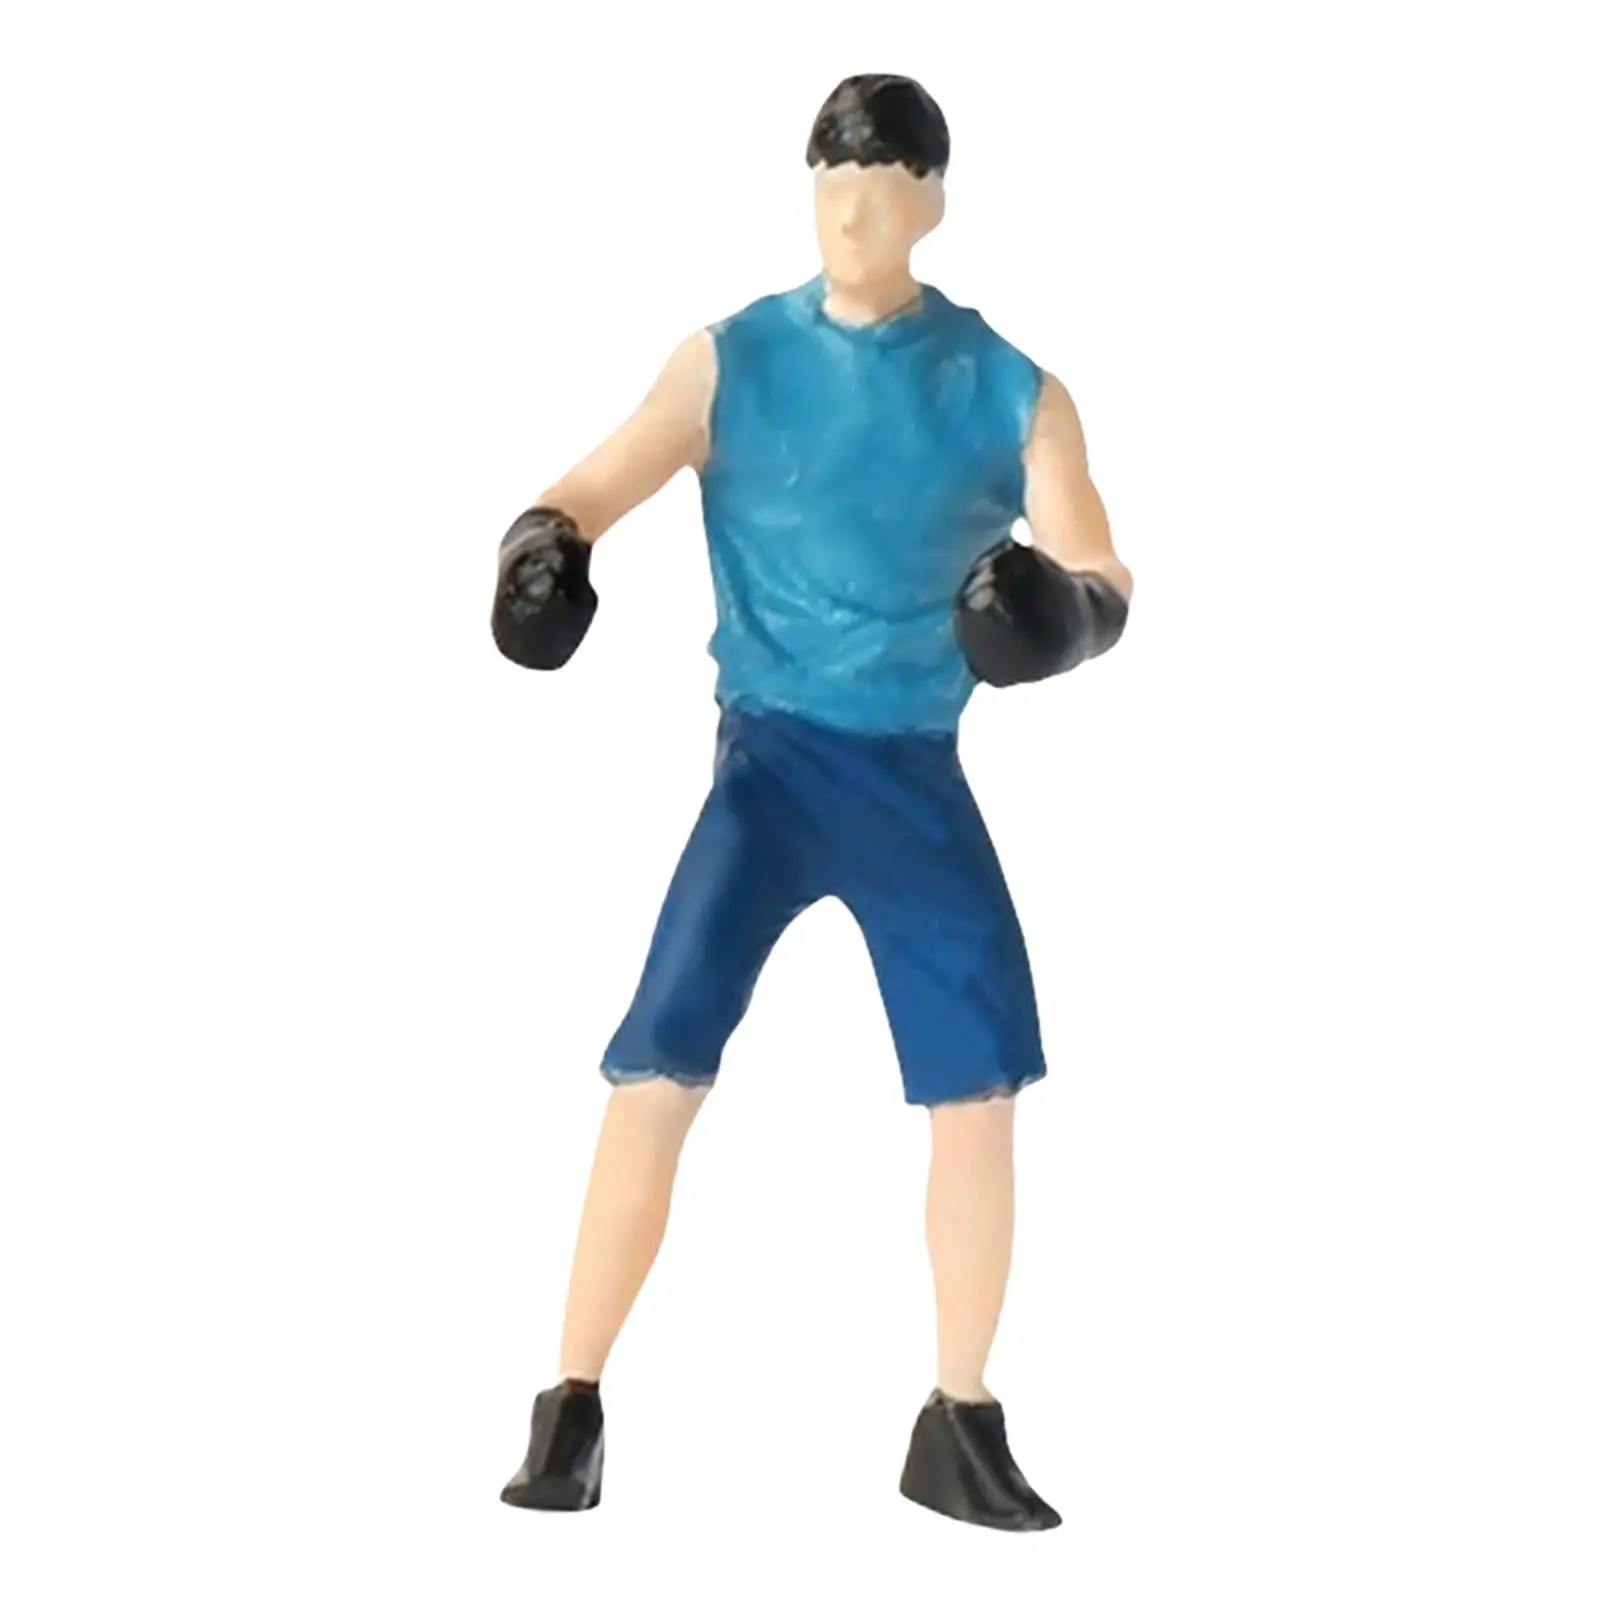 1/64 Scale Models Figurine Boxing Man People Figures for DIY Scene Decor